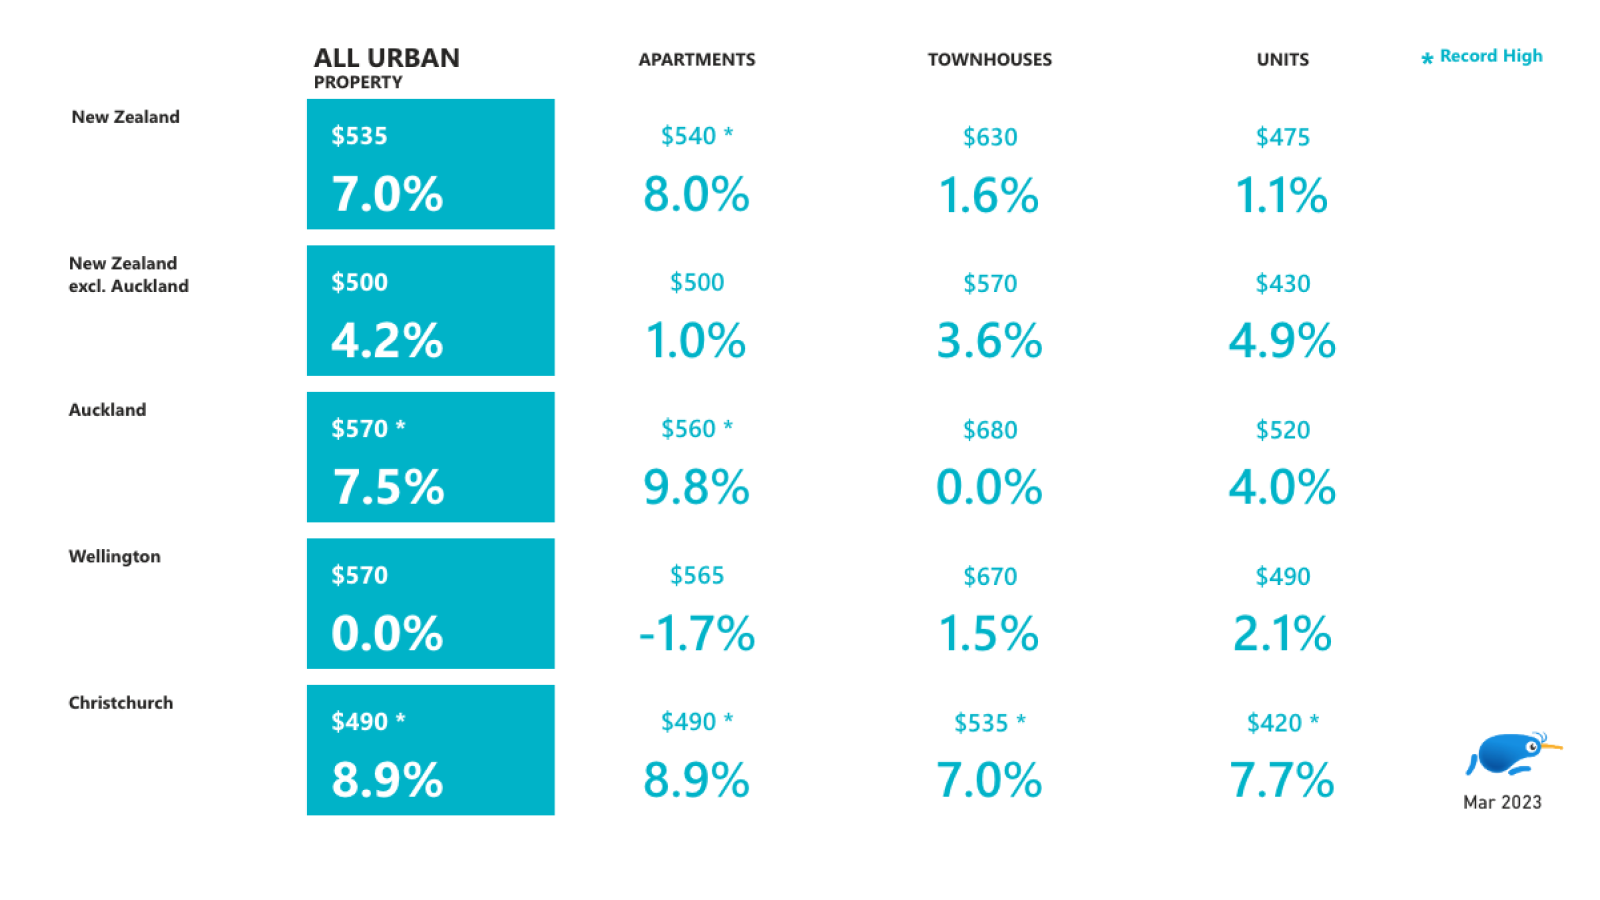 All Urban Property Summary